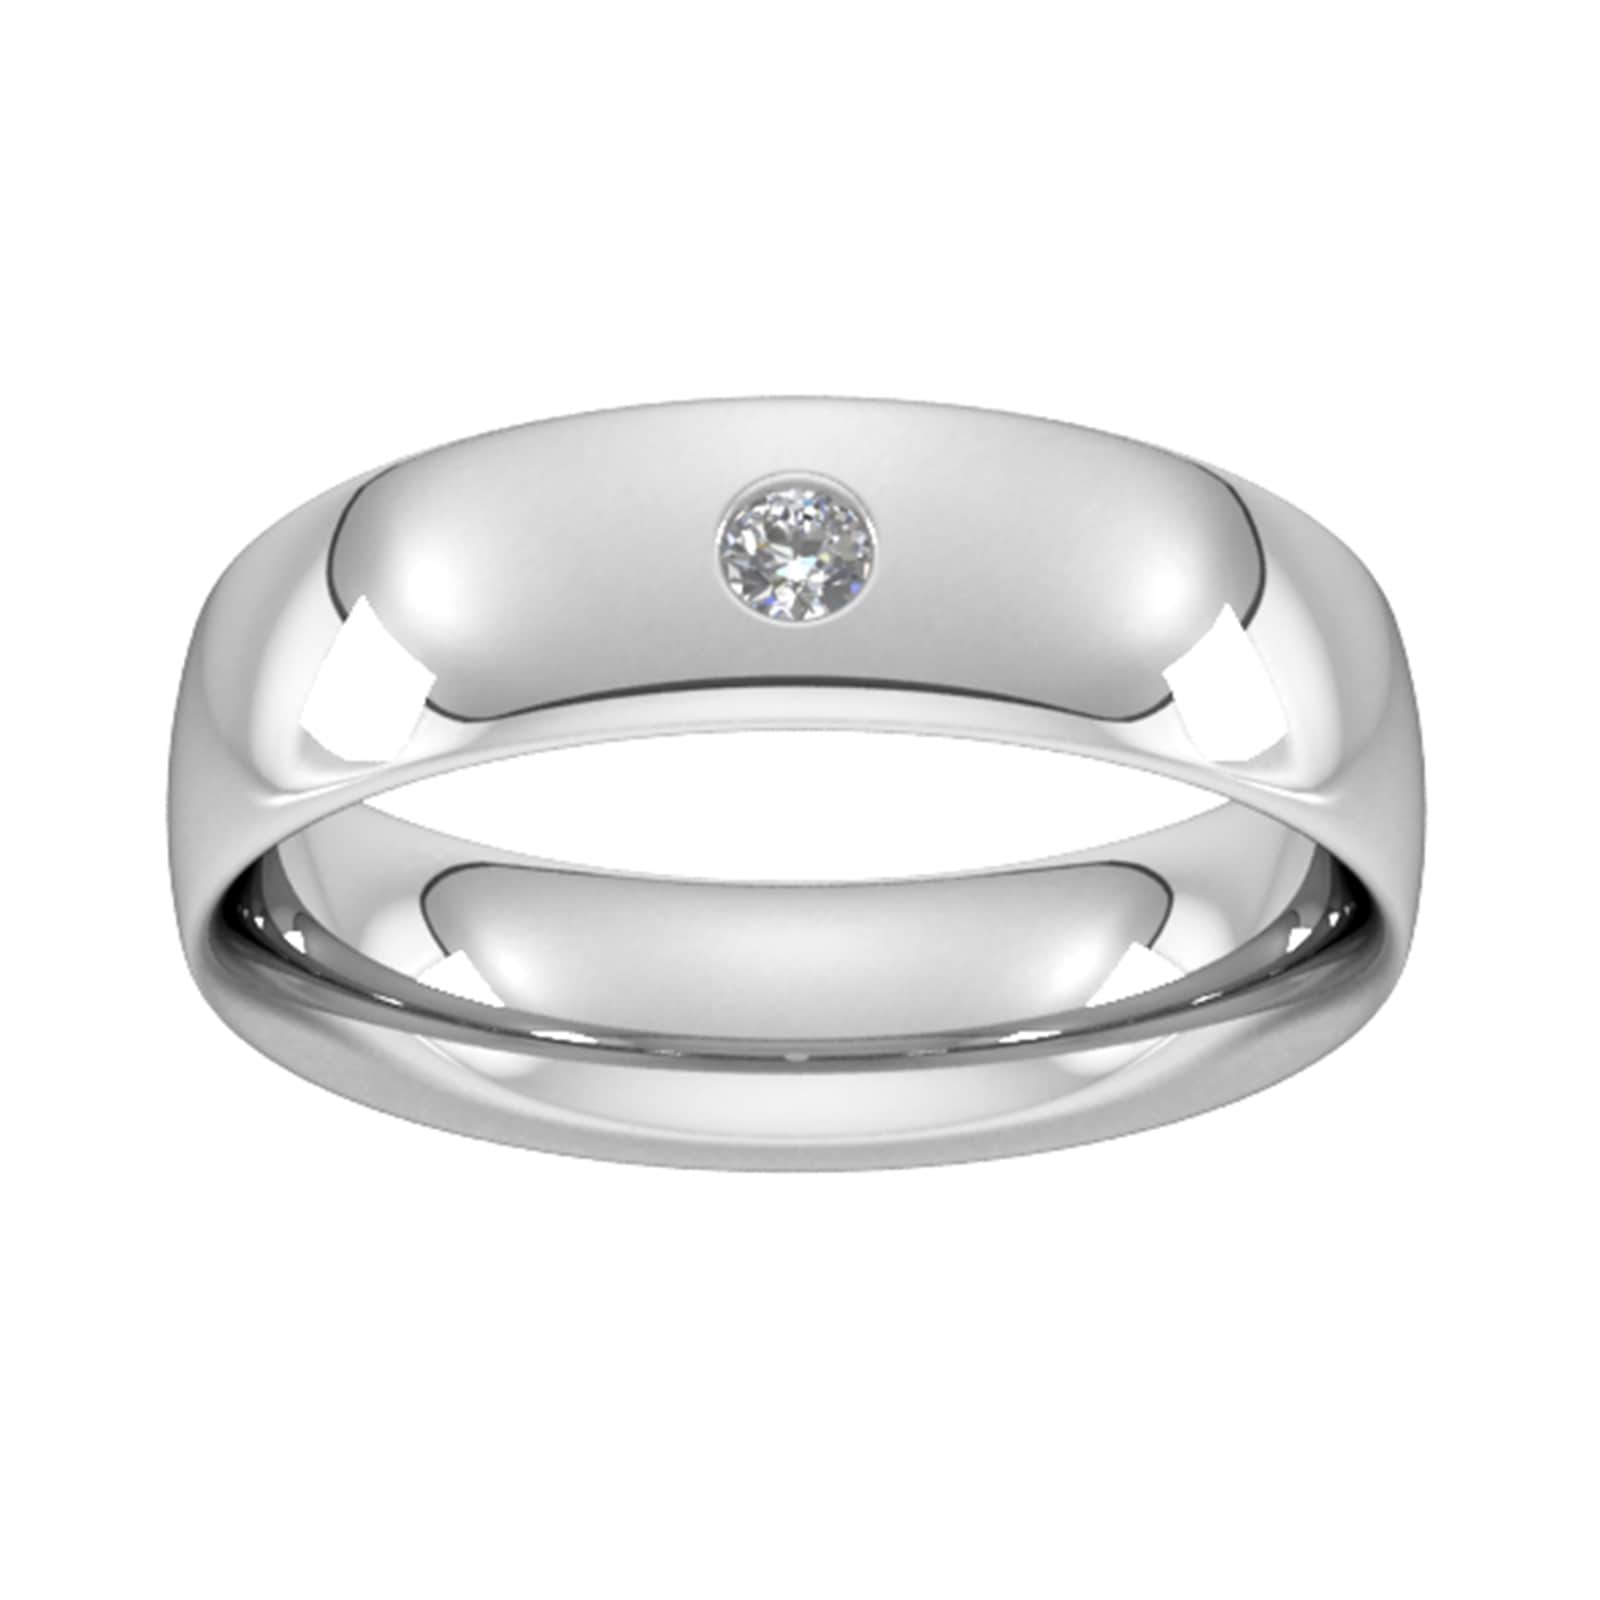 6mm Brilliant Cut Diamond Set Wedding Ring In Platinum - Ring Size S.5